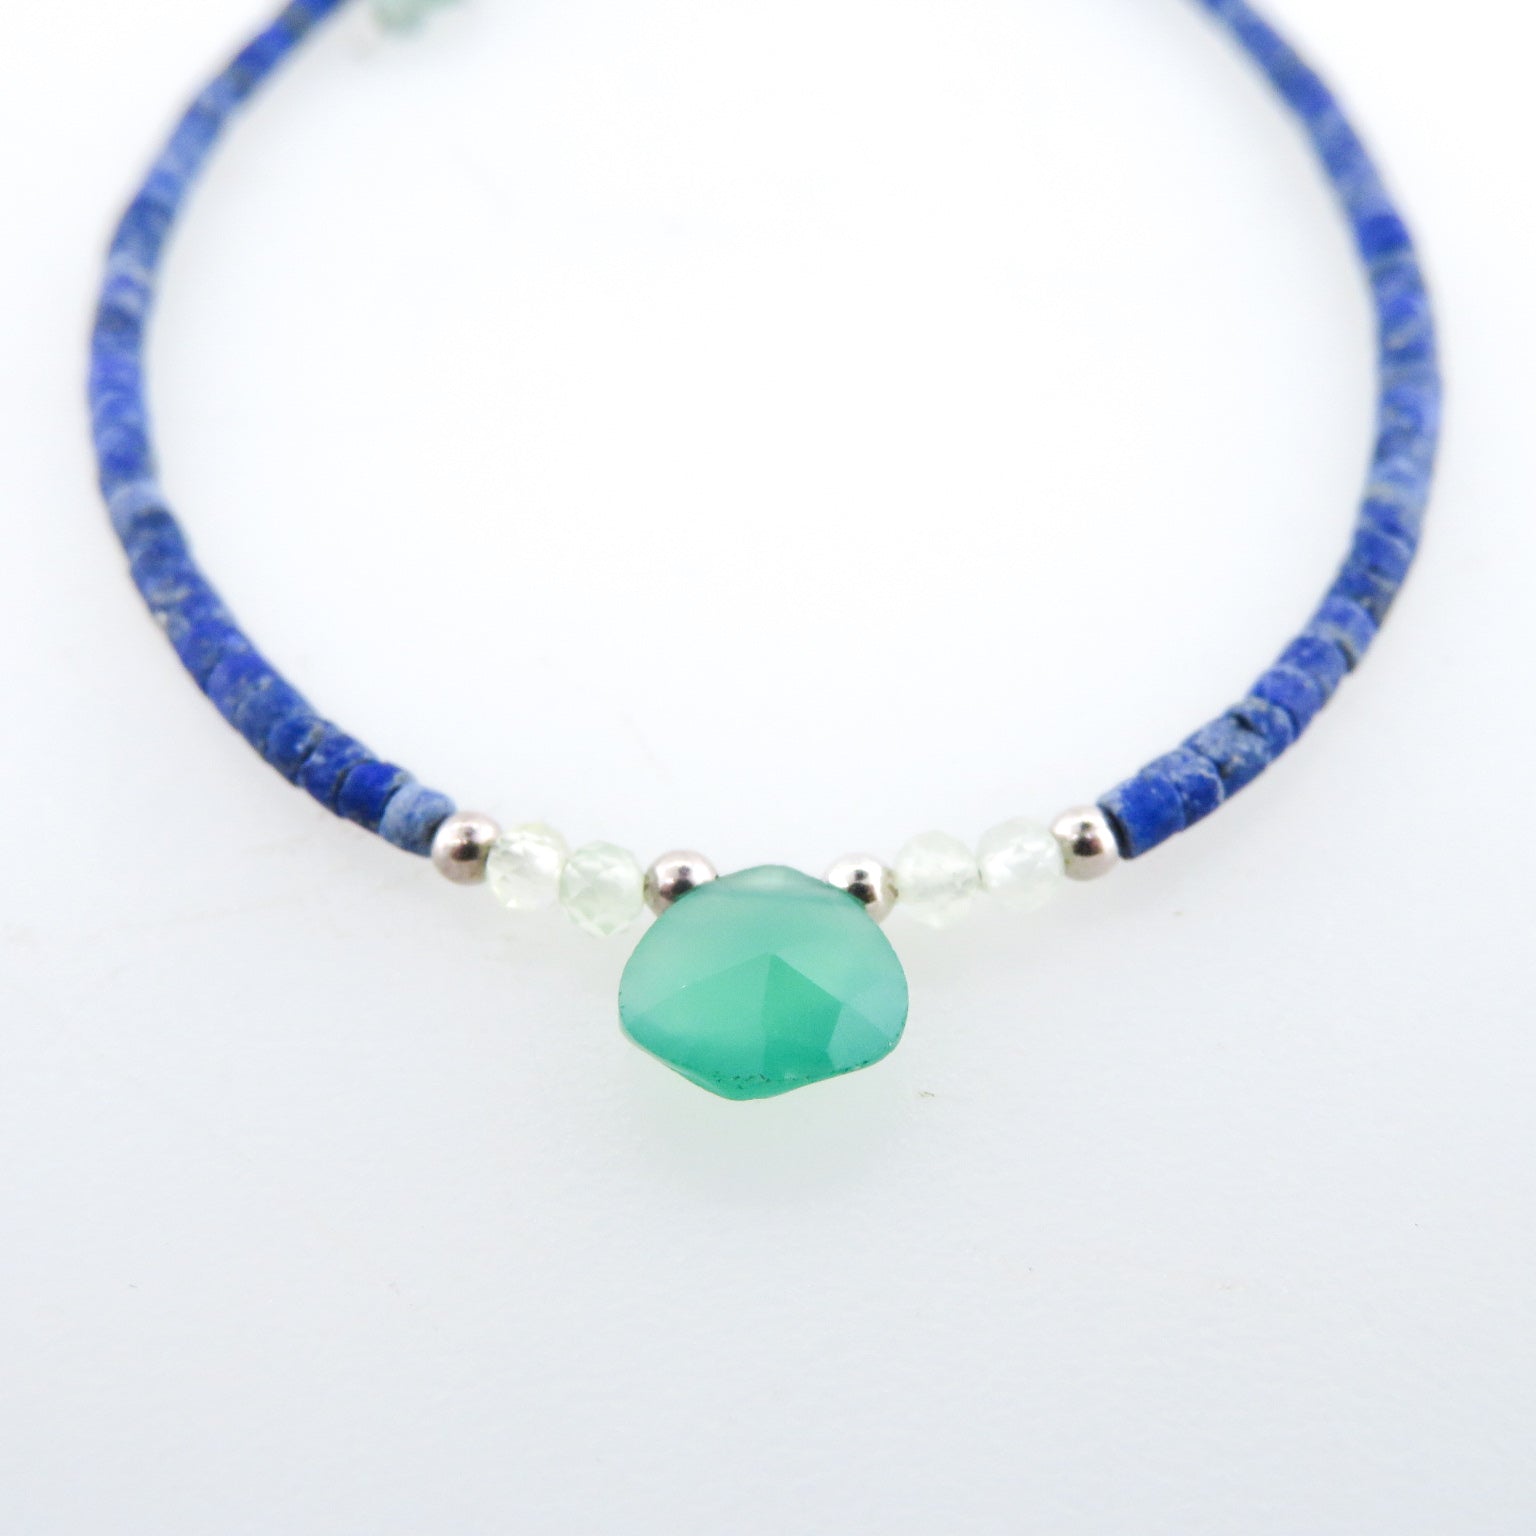 Lapis Lazuli Bracelet with Green Onyx, Rainbow Moon Stone and Silver Beads